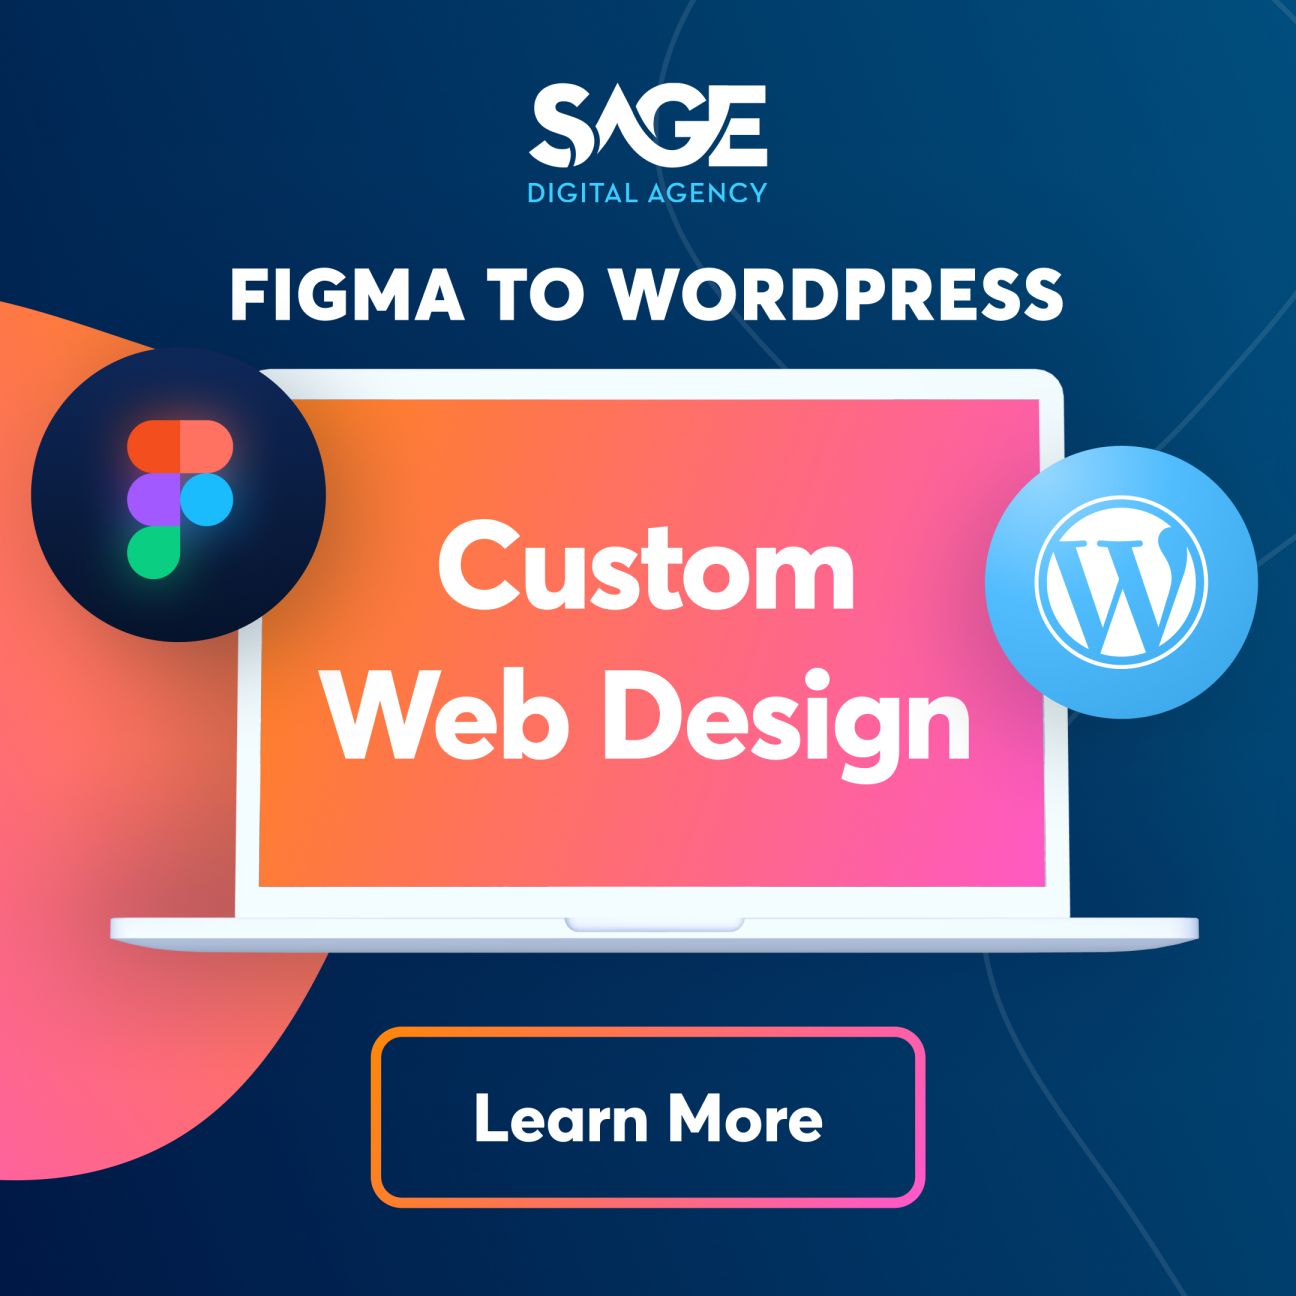 Figma to WordPress Custom Web Design Services